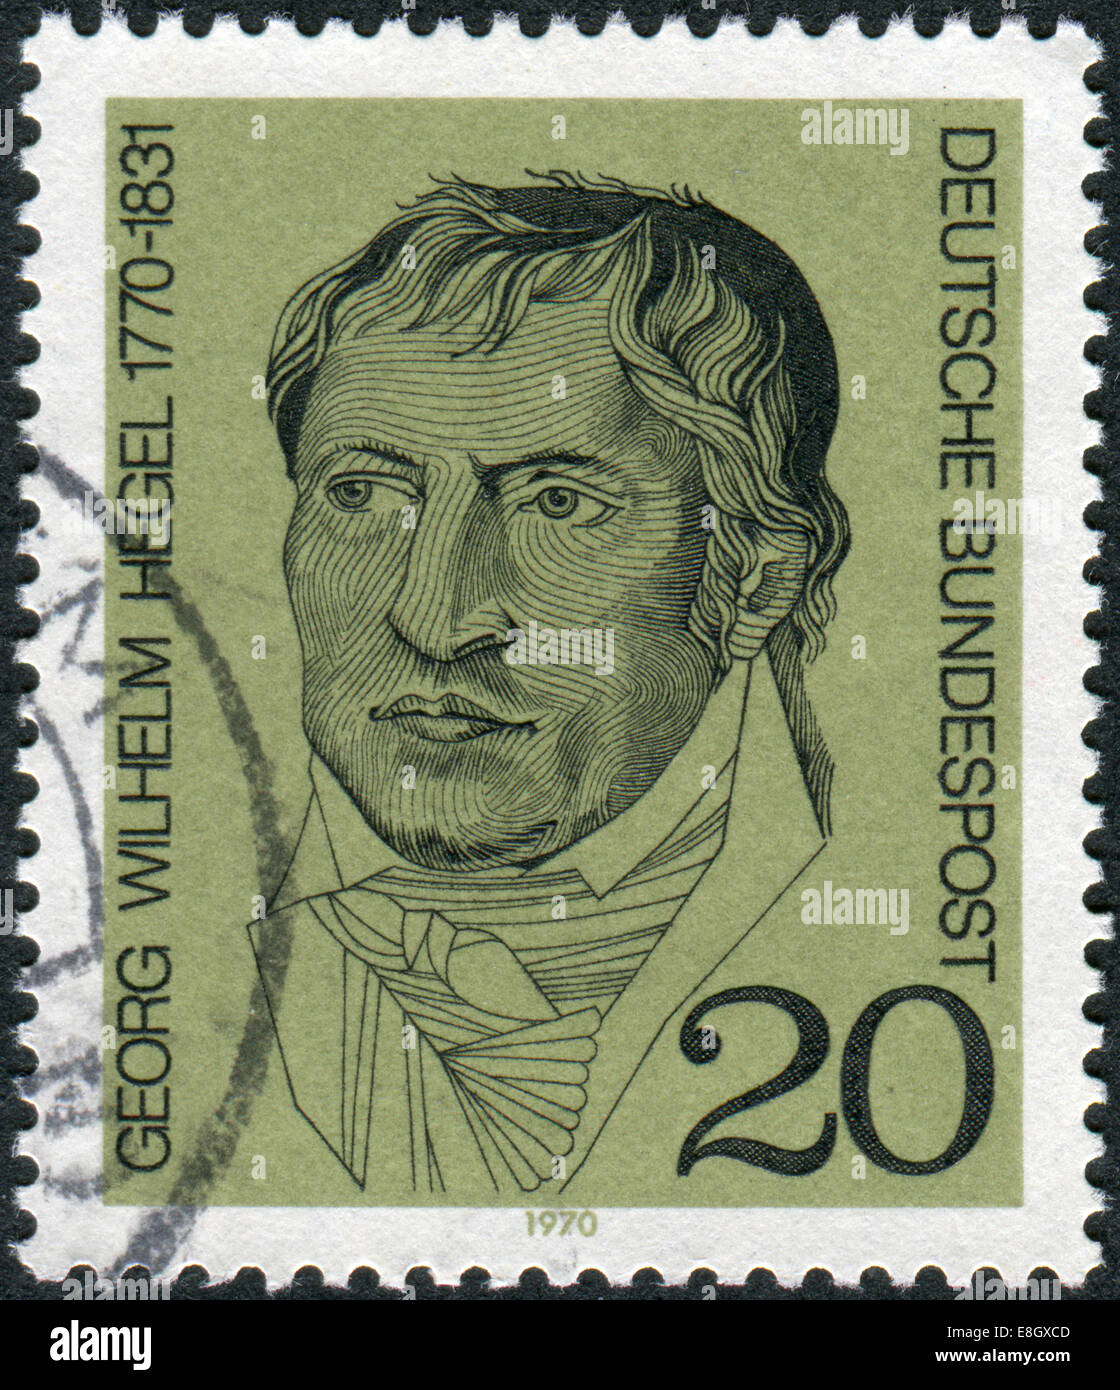 Stamp printed in Germany, shows a German philosopher, and a major figure in German Idealism, Georg Wilhelm Friedrich Hegel Stock Photo